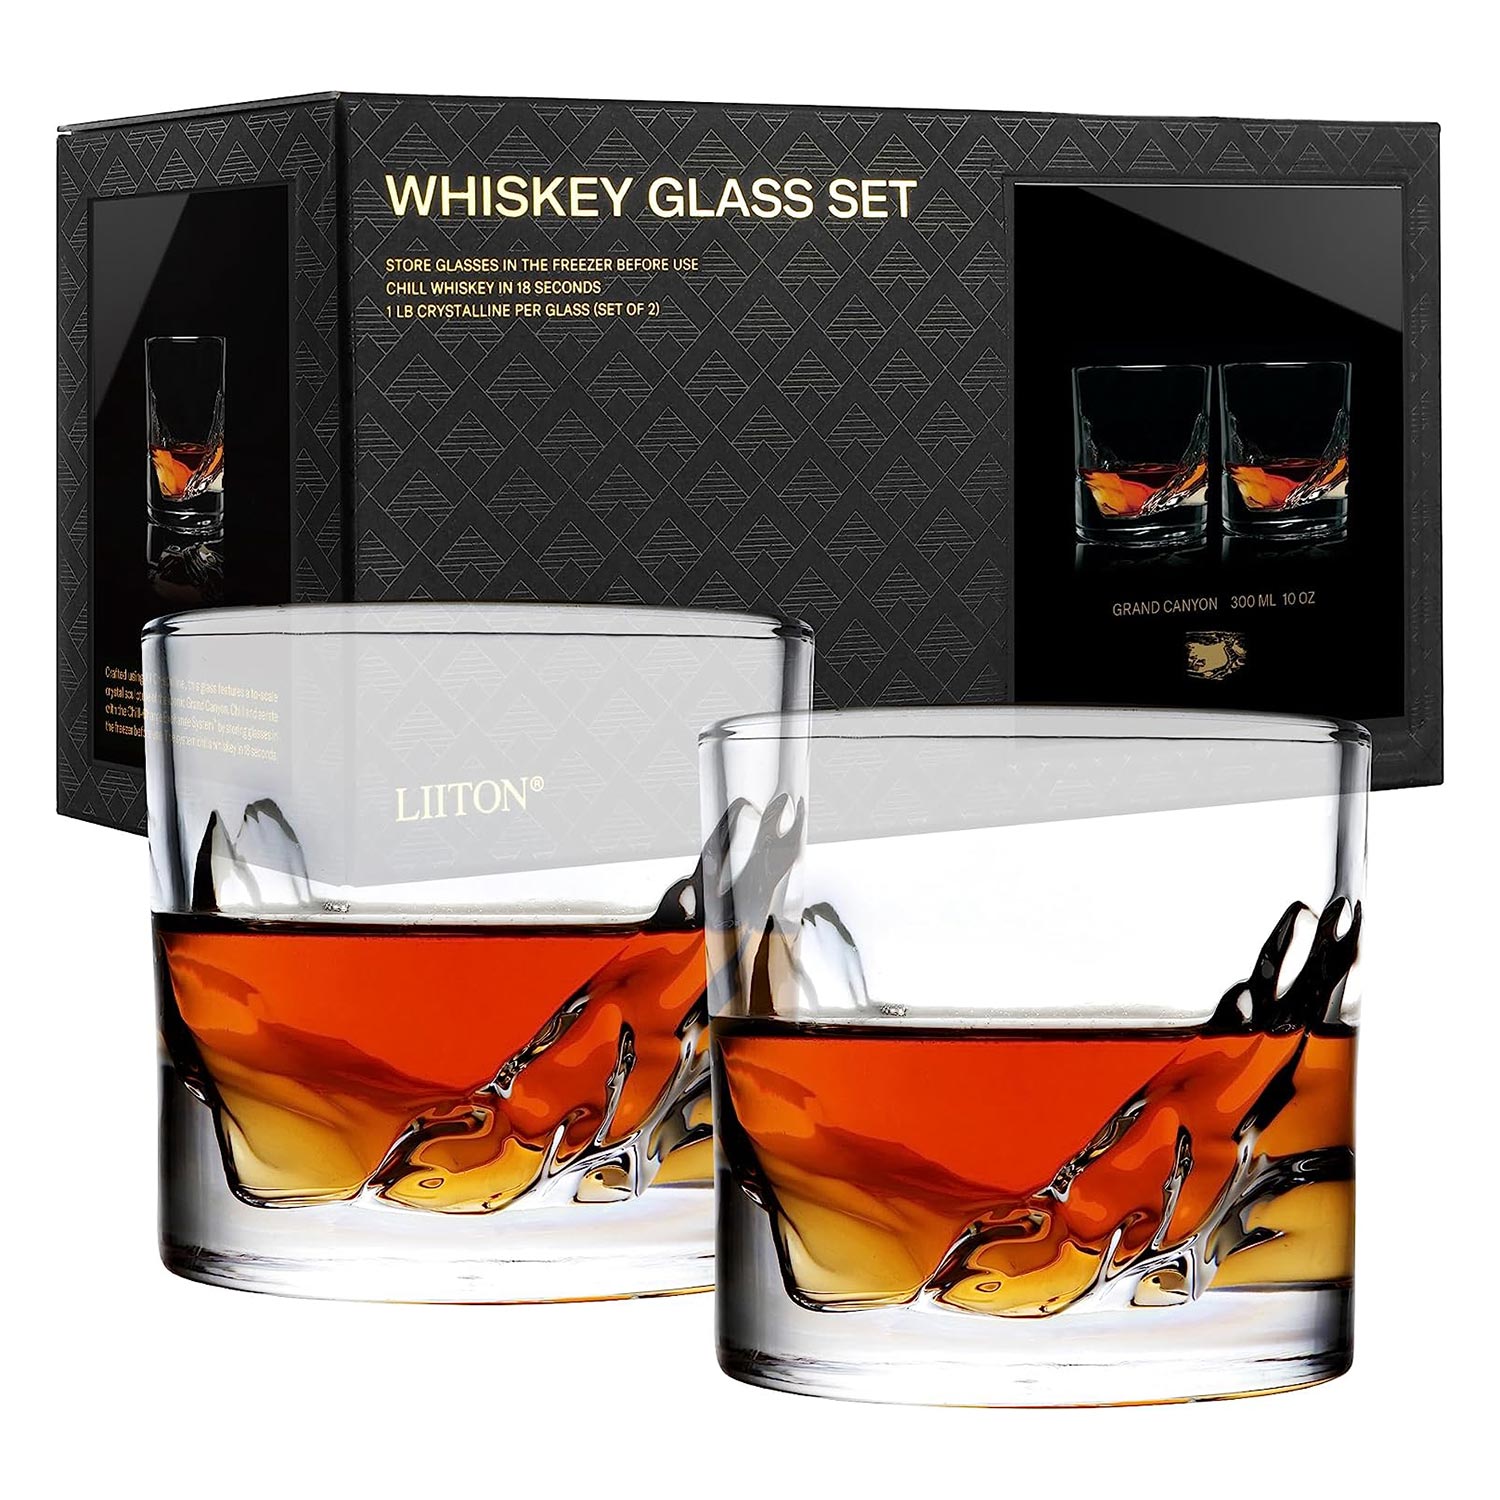 Grand Canyon Crystal Bourbon Whiskey Glasses - Set of 2 - LIITON